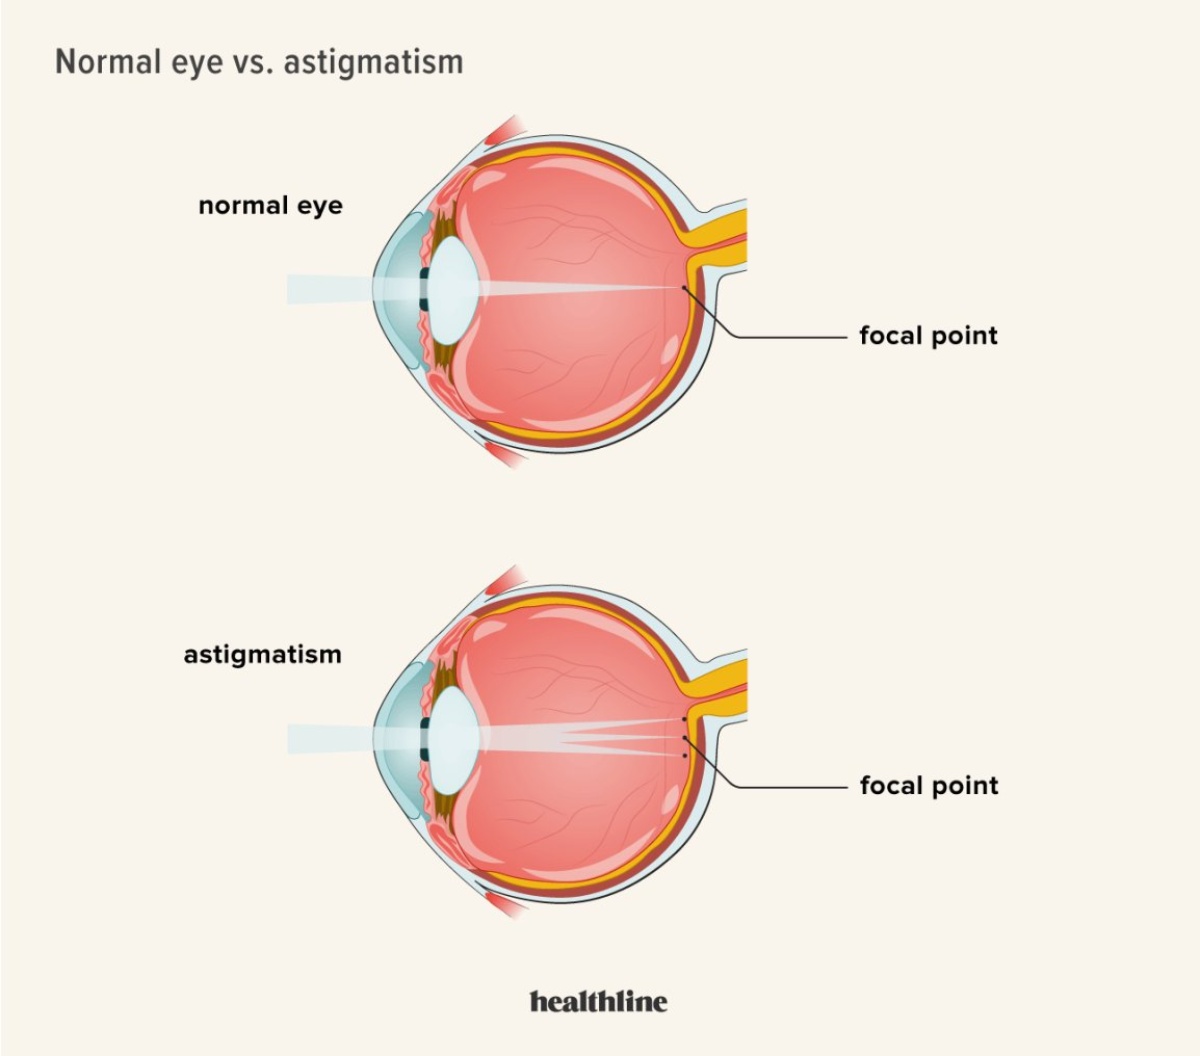 irregular lenses shape causes astigmatism and blurry vision